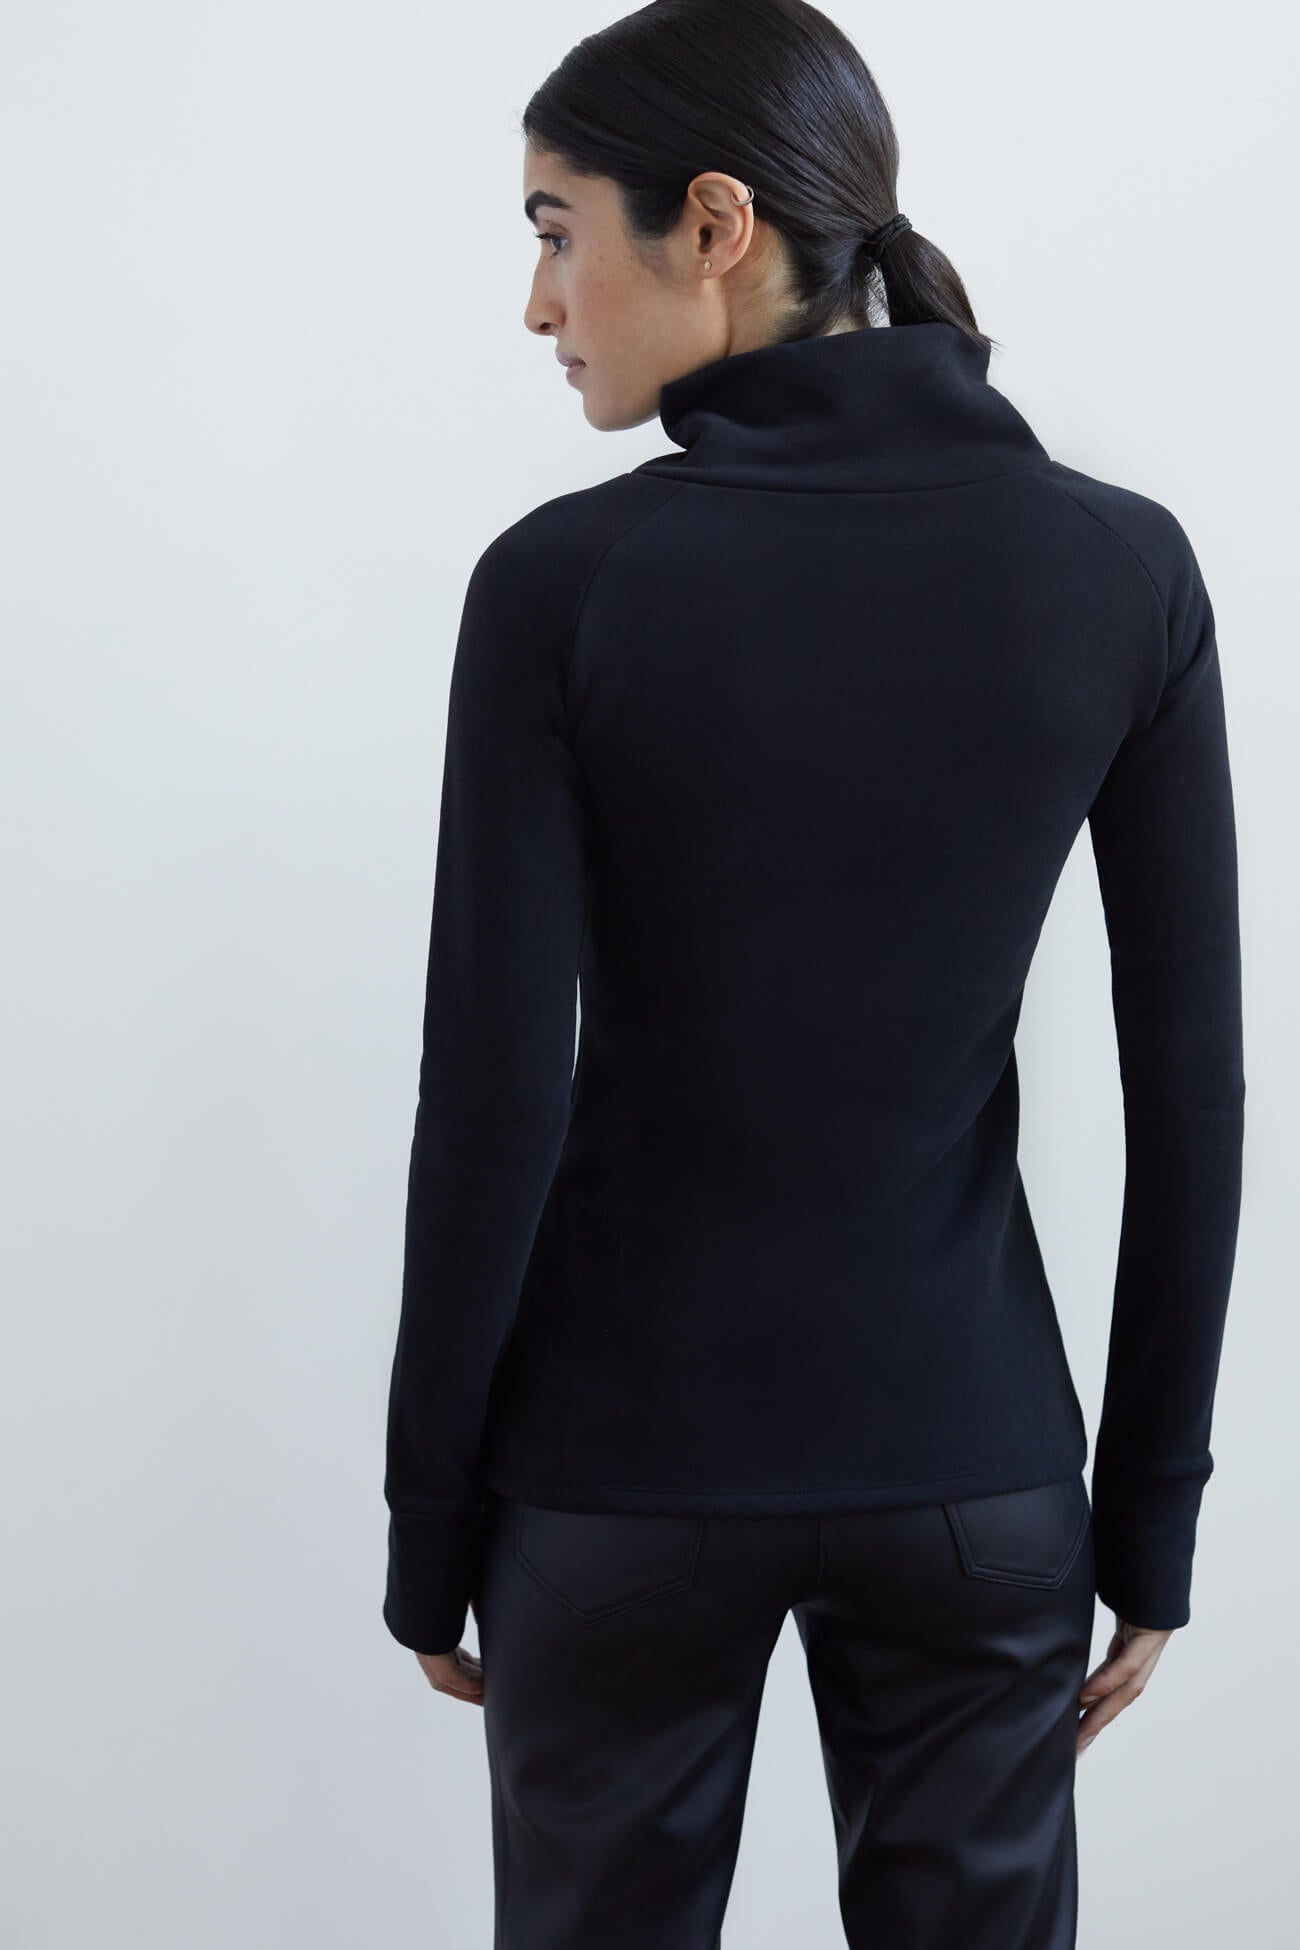 Sleek Black Loungewear - Brie Sweatshirt | Marcella